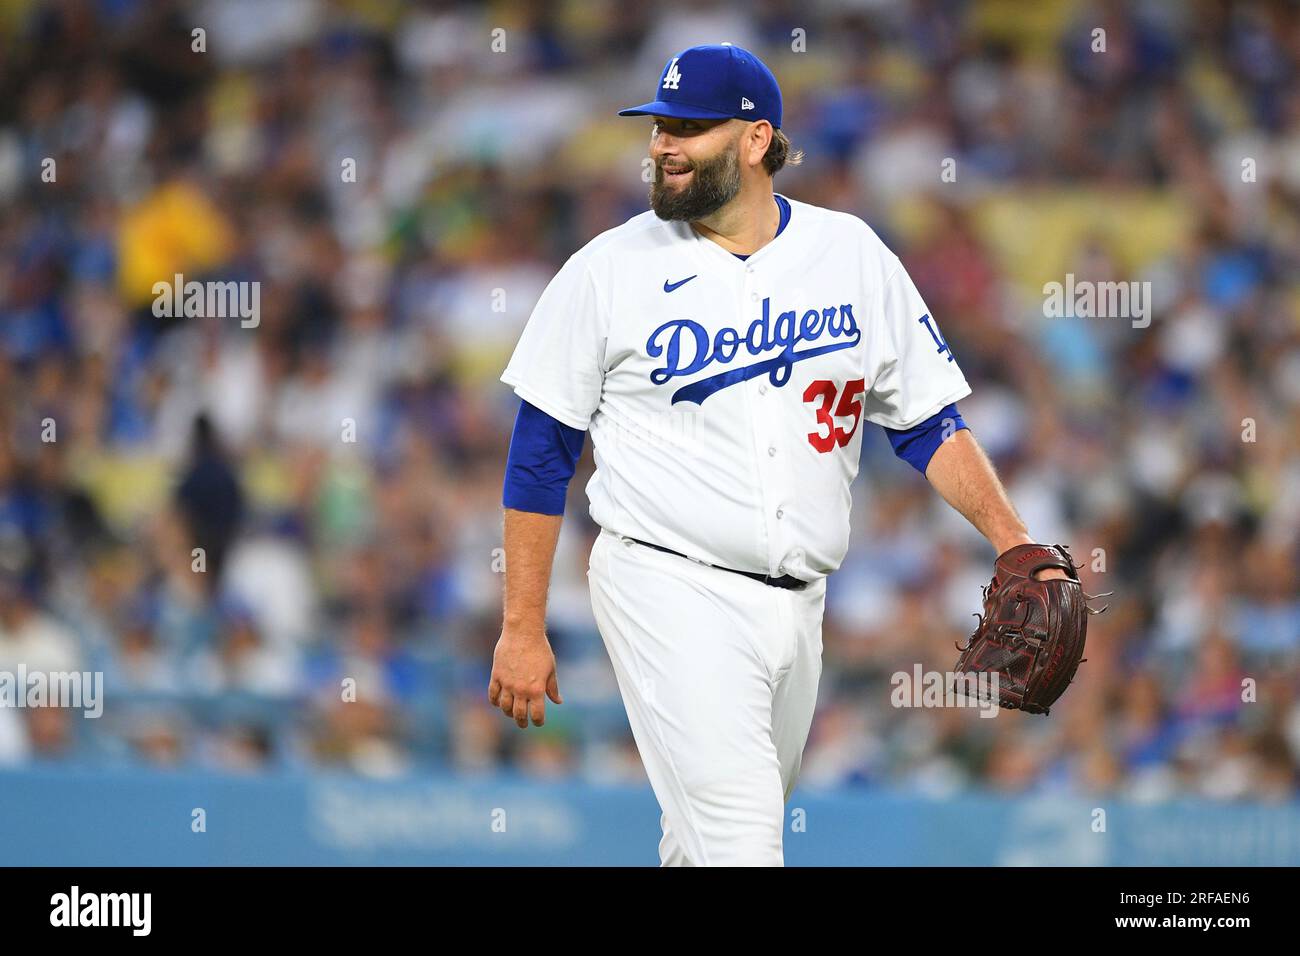 LOS ANGELES, CA - AUGUST 01: Los Angeles Dodgers pitcher Lance